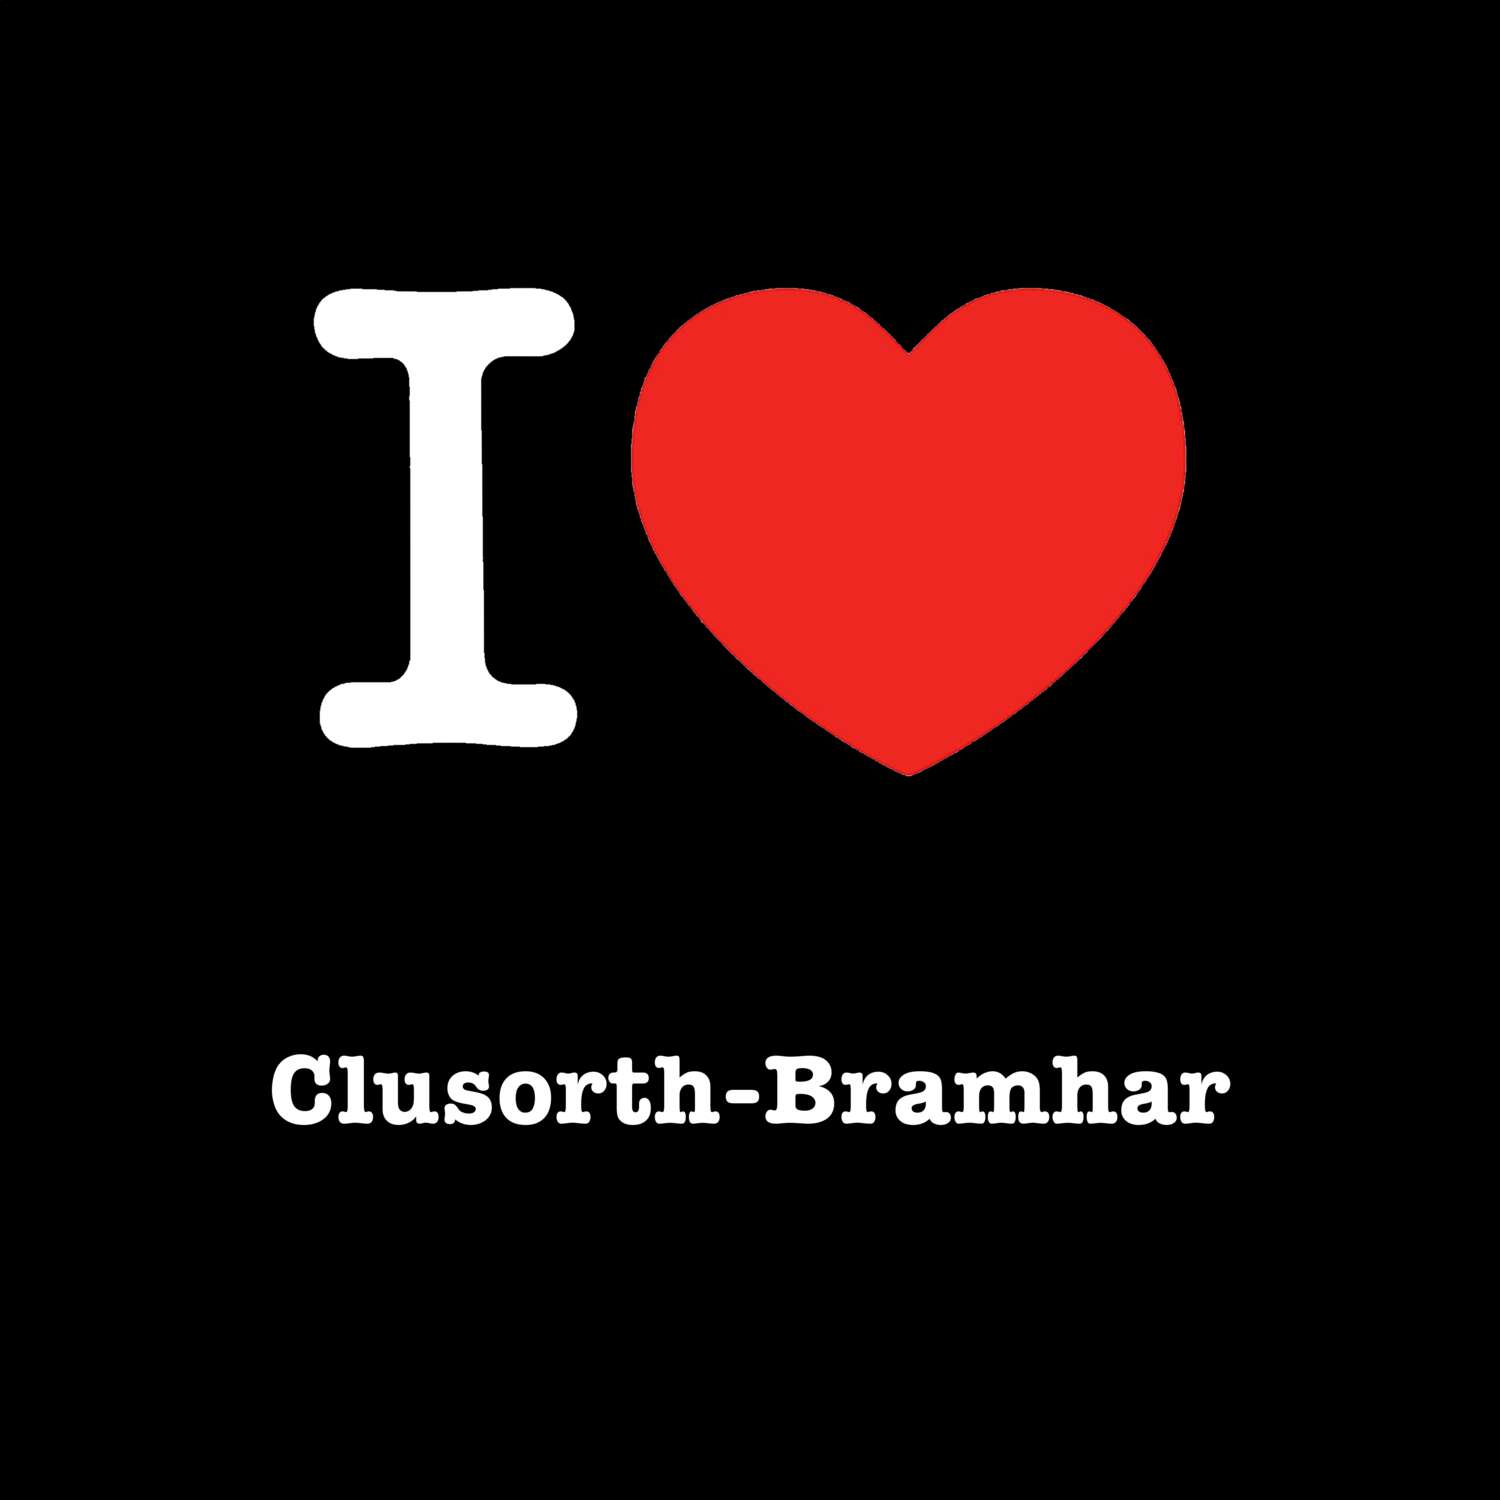 Clusorth-Bramhar T-Shirt »I love«